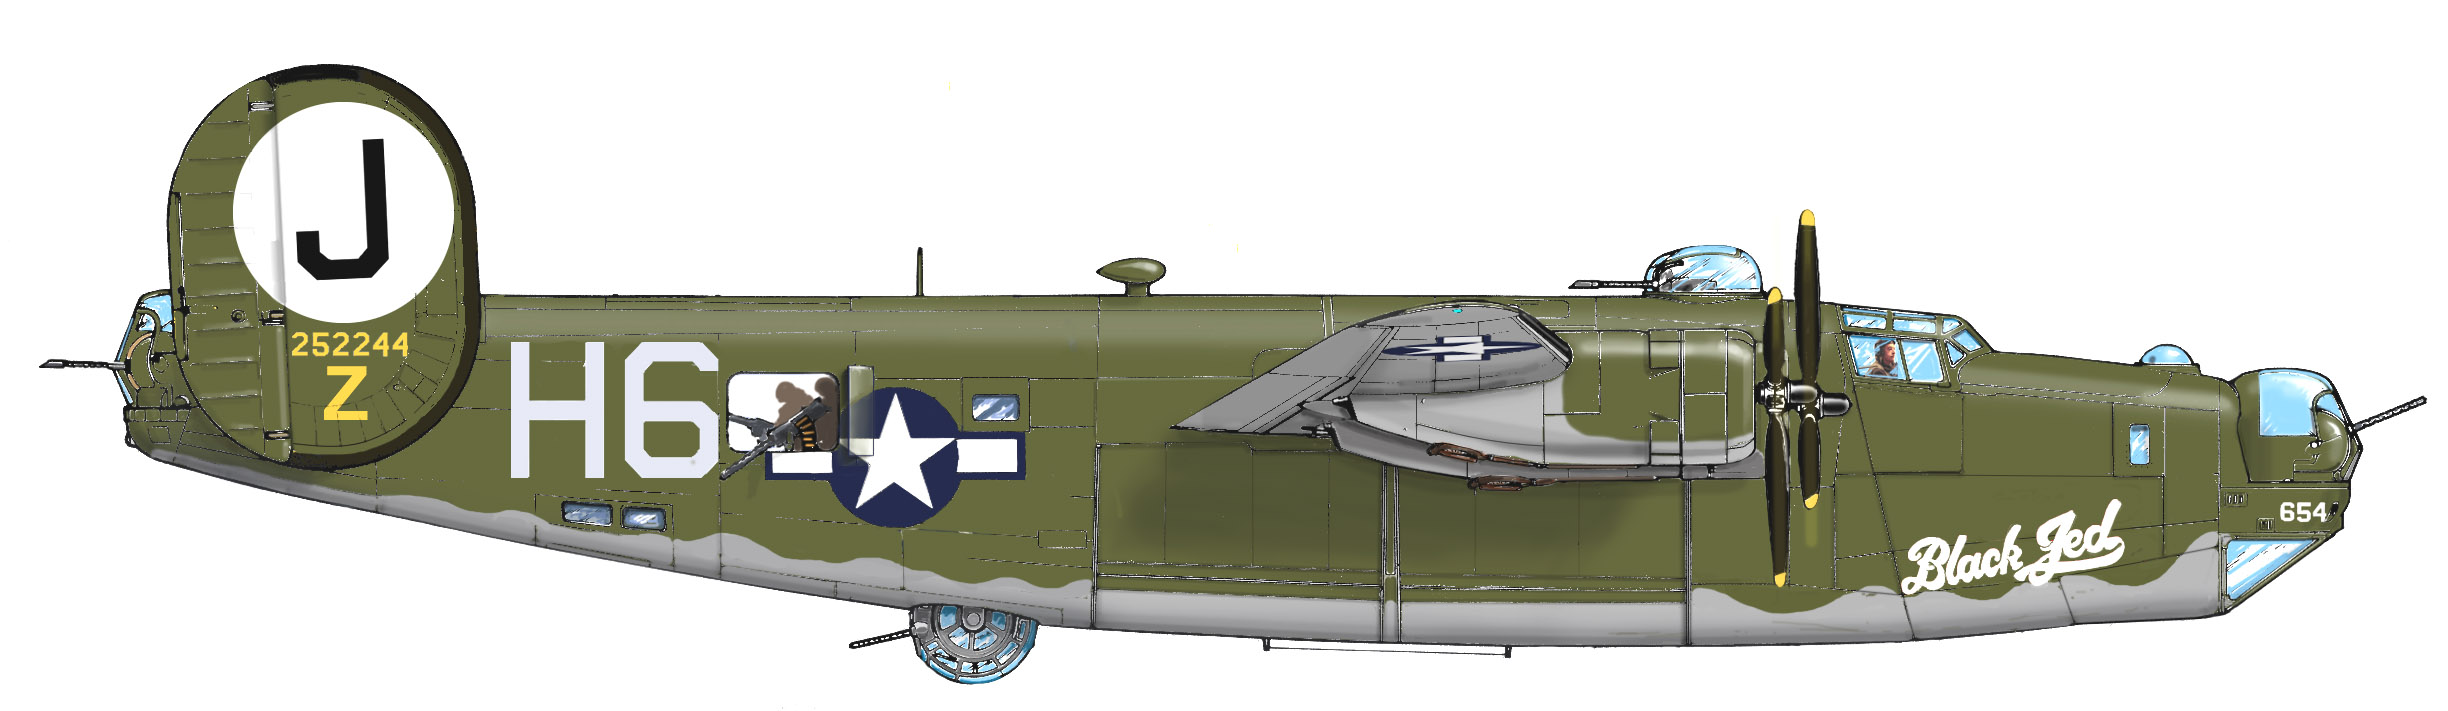 Б 24 04. B-24 Liberator. B24 самолет. Consolidated b-24 Liberator модель. B24 ONFORM.